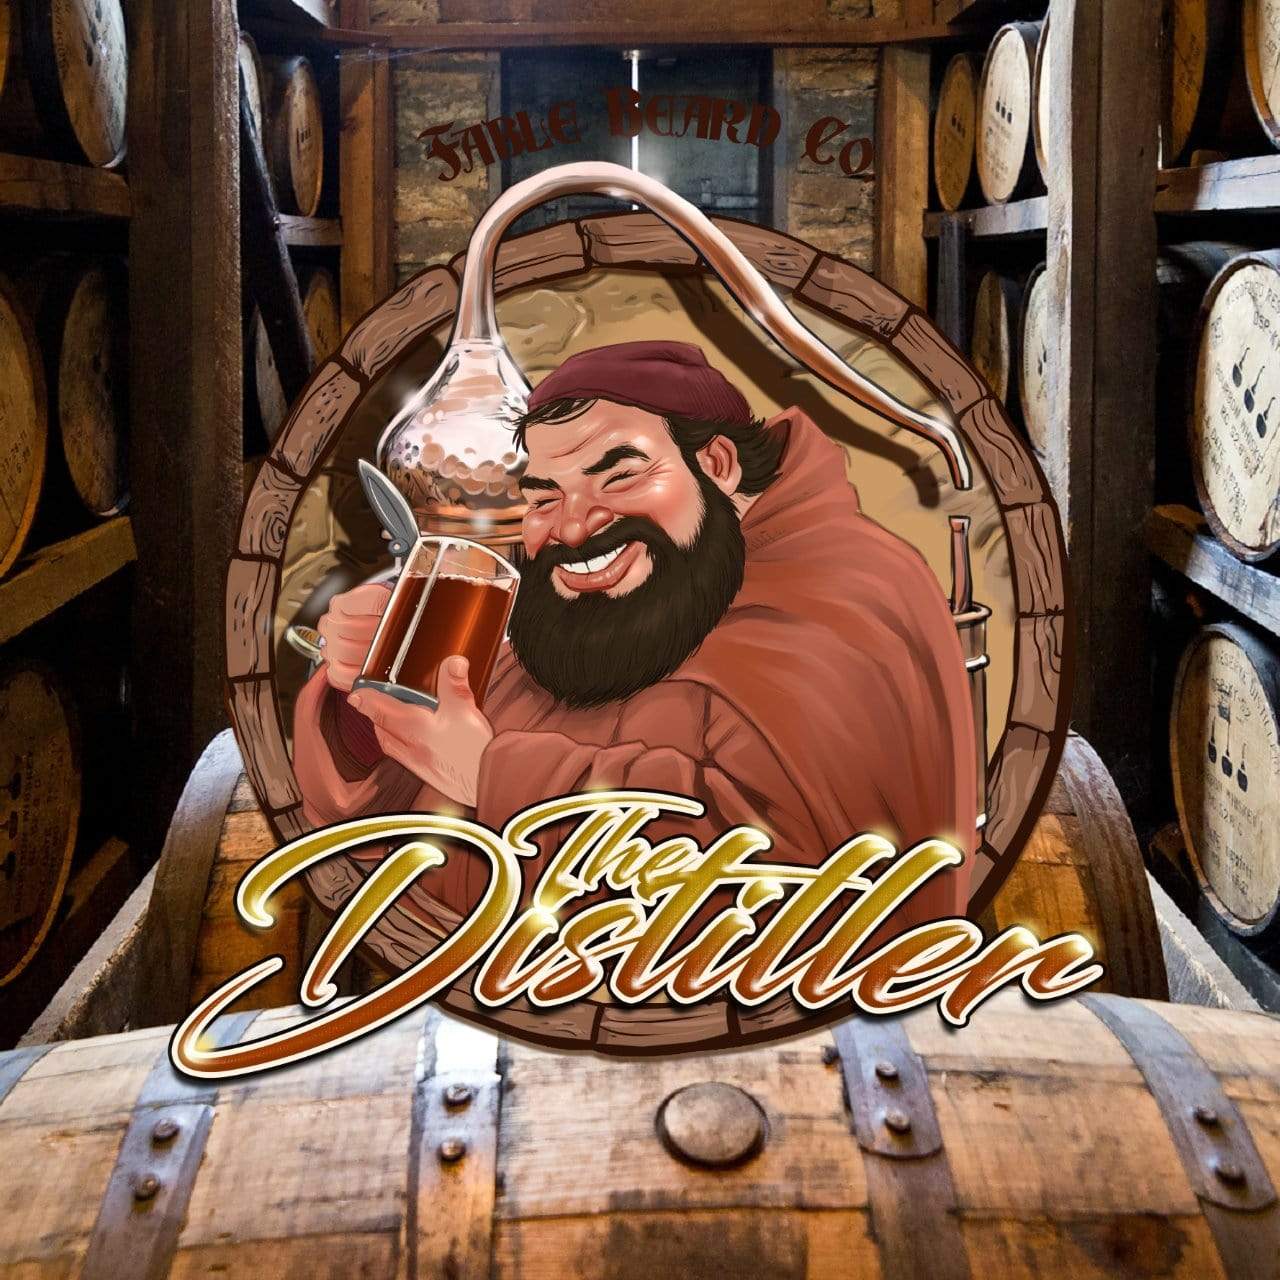 The Distiller - Beard Butter - Mulled Spices, Aged Bourbon, and Deep Barrel Woods